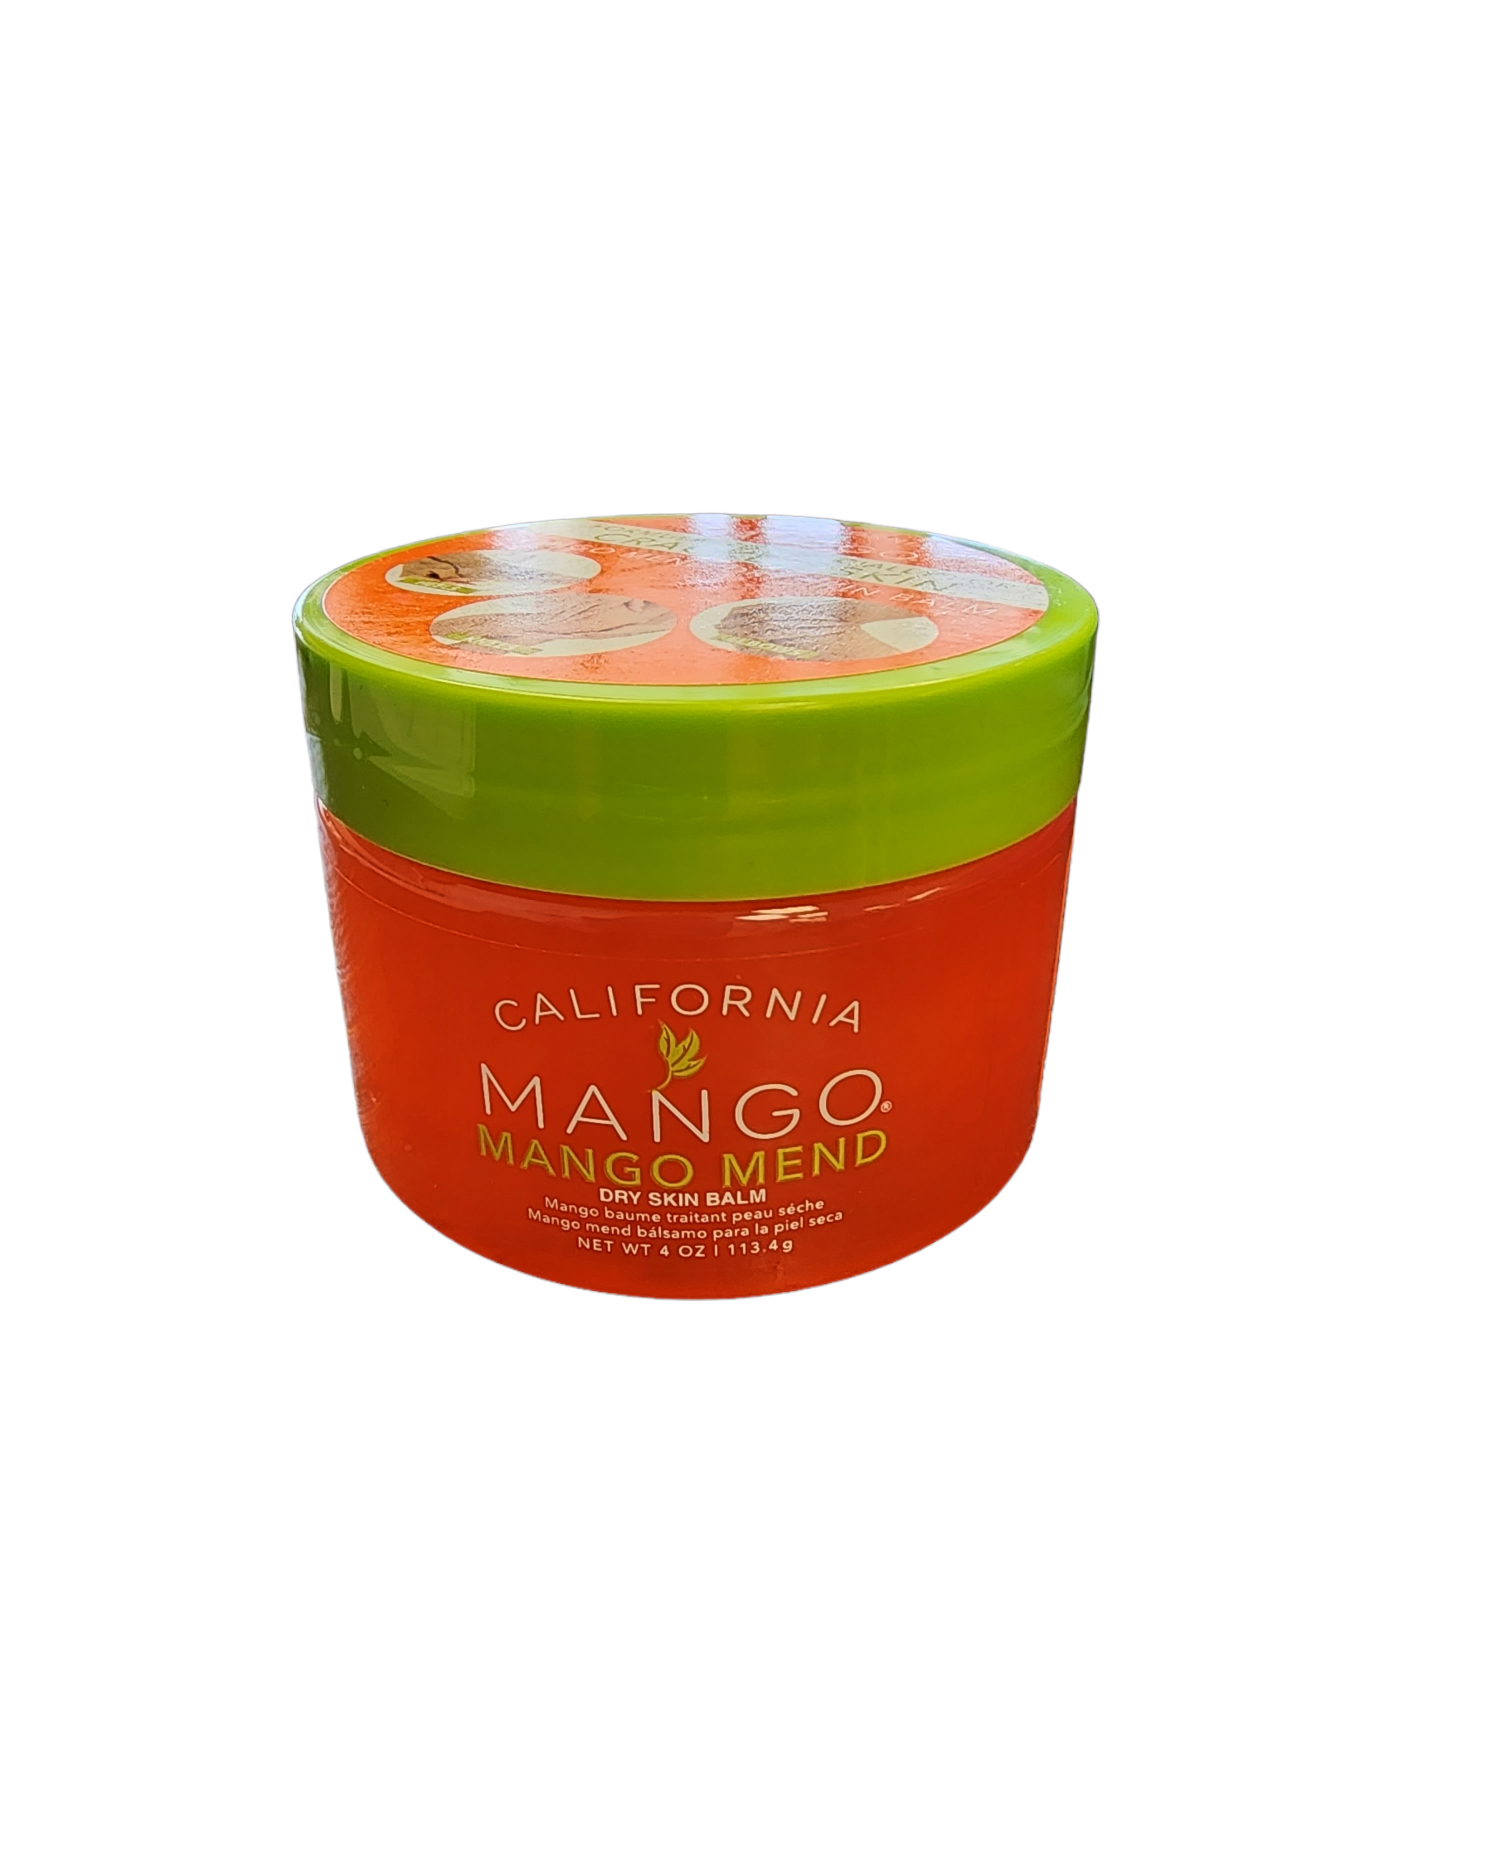 California Mango Mango Mend